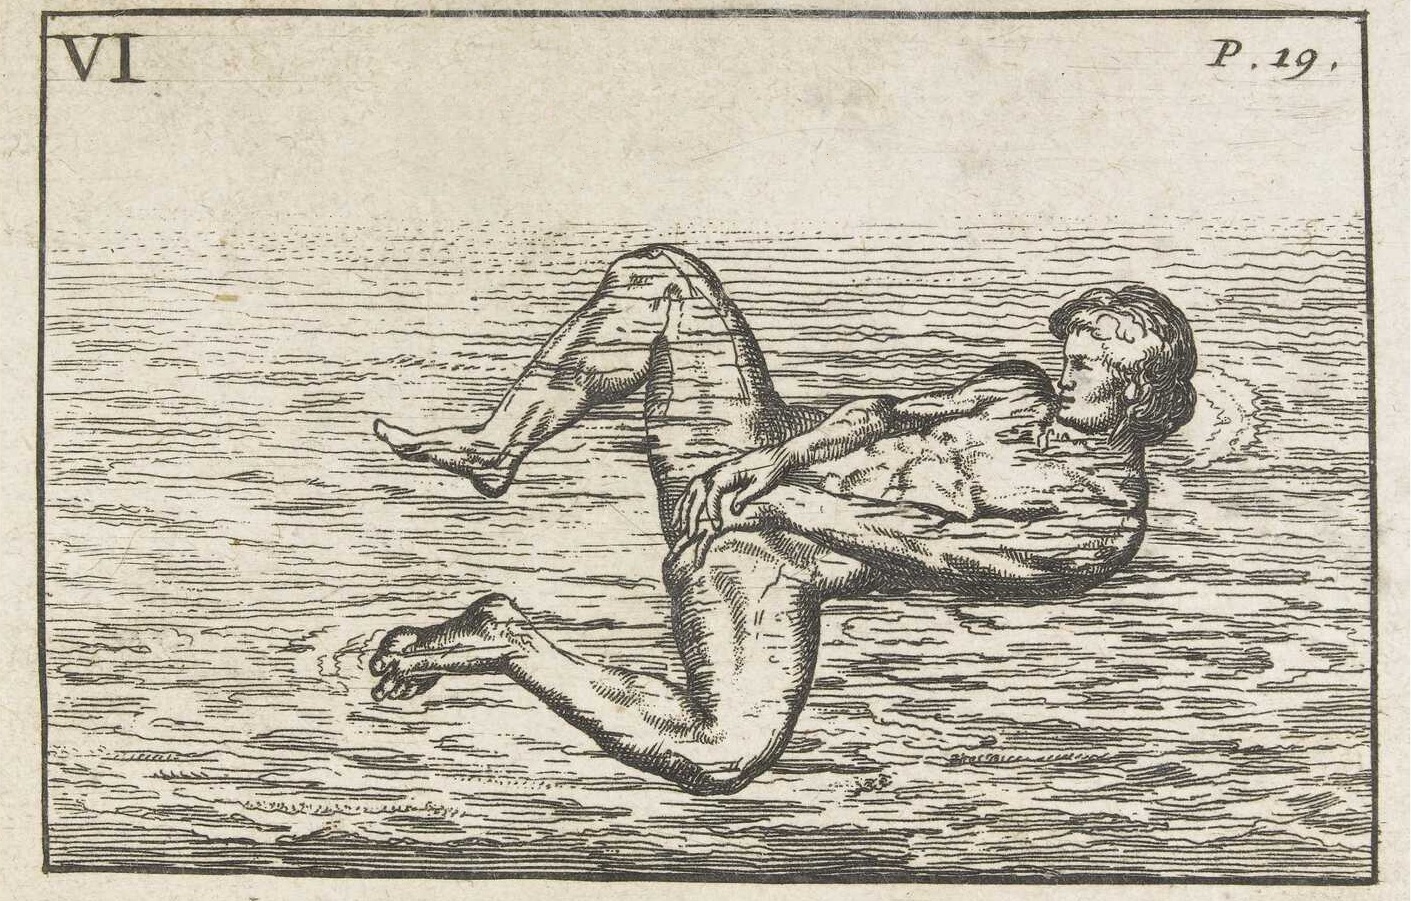 17th c. illustration of swimming technique